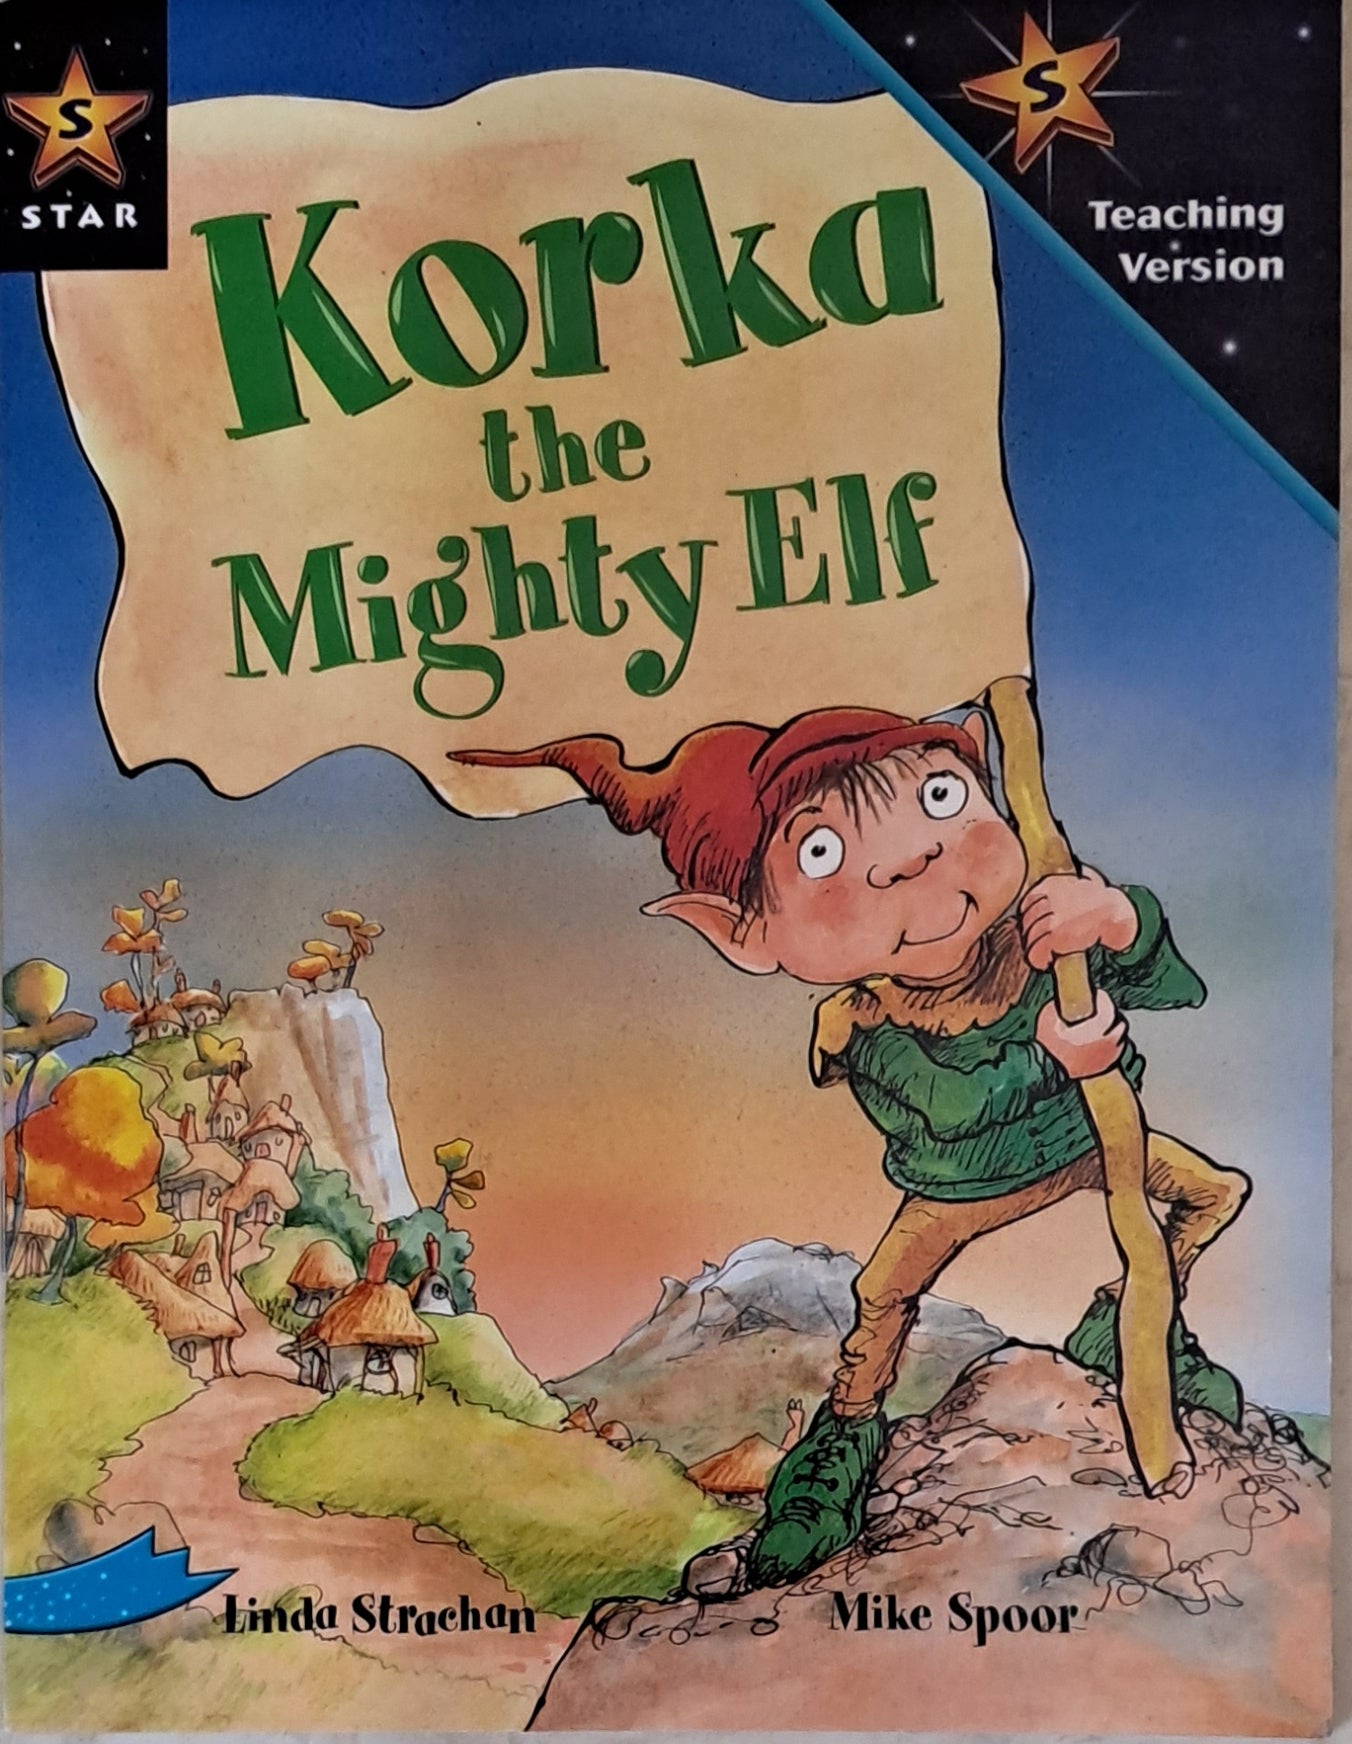 Korka the Mighty Elf - Teaching Version